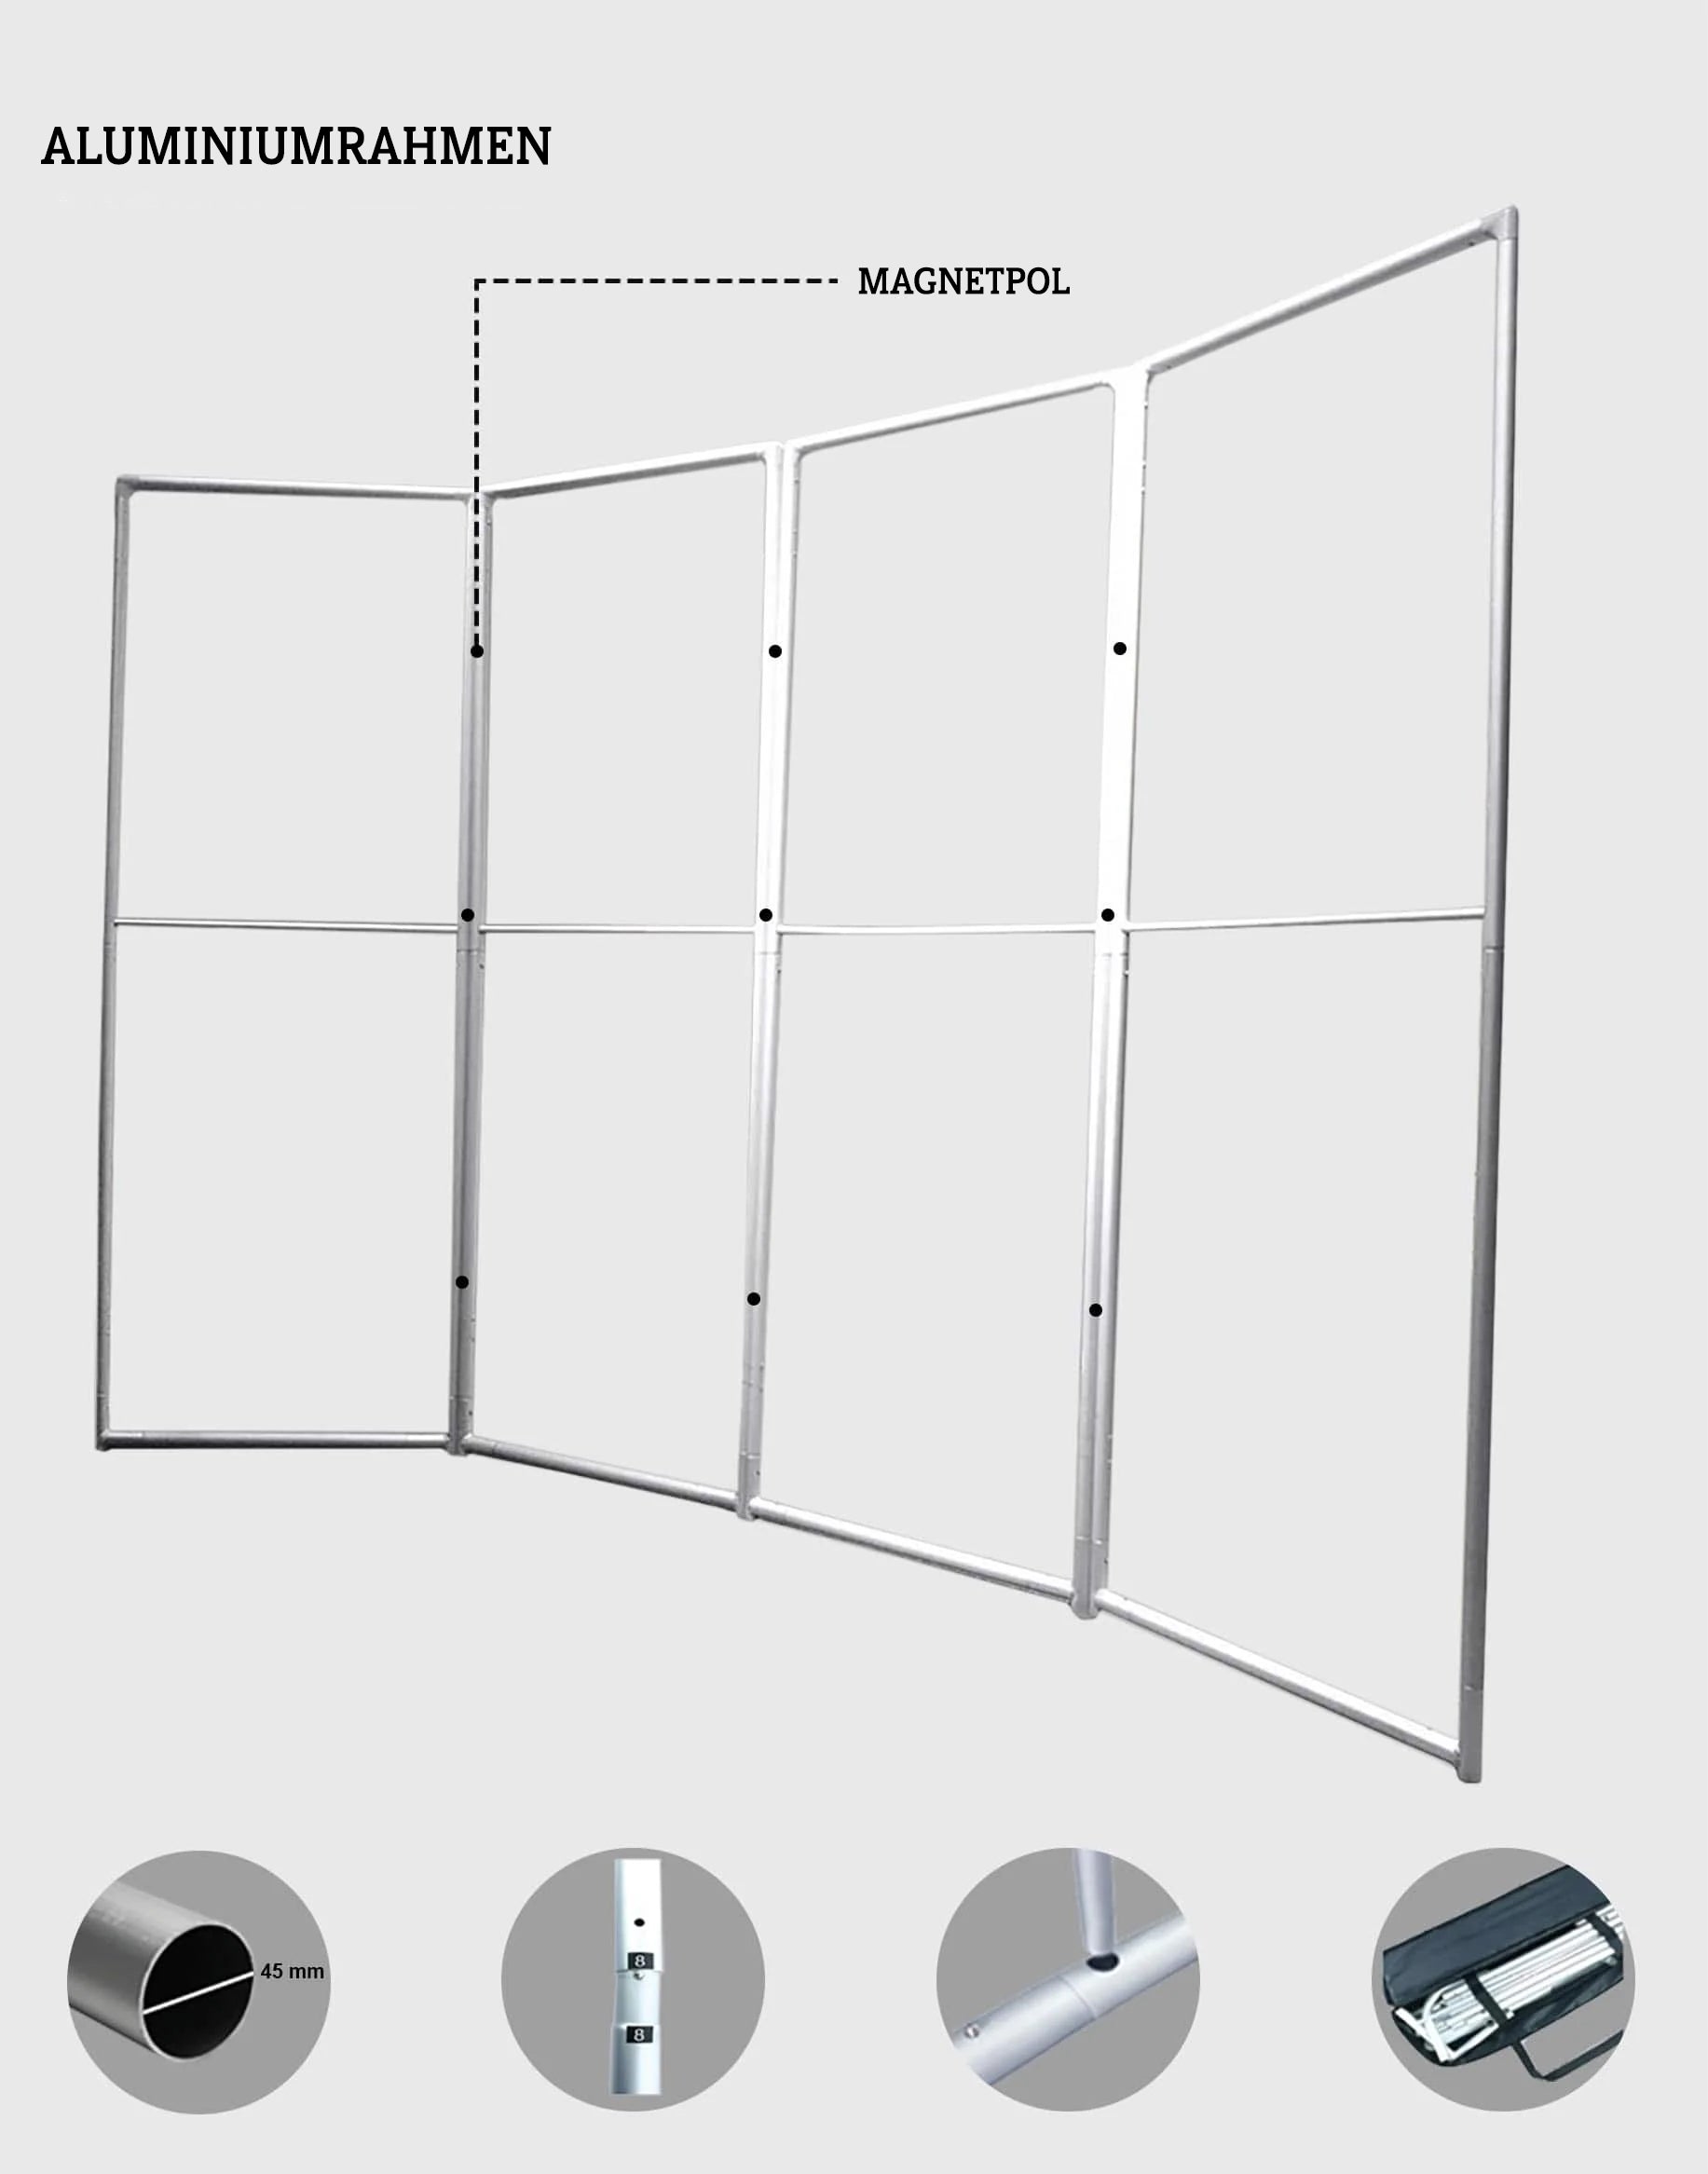 4-Panel-Magnetdisplay Aluminiumrahmen